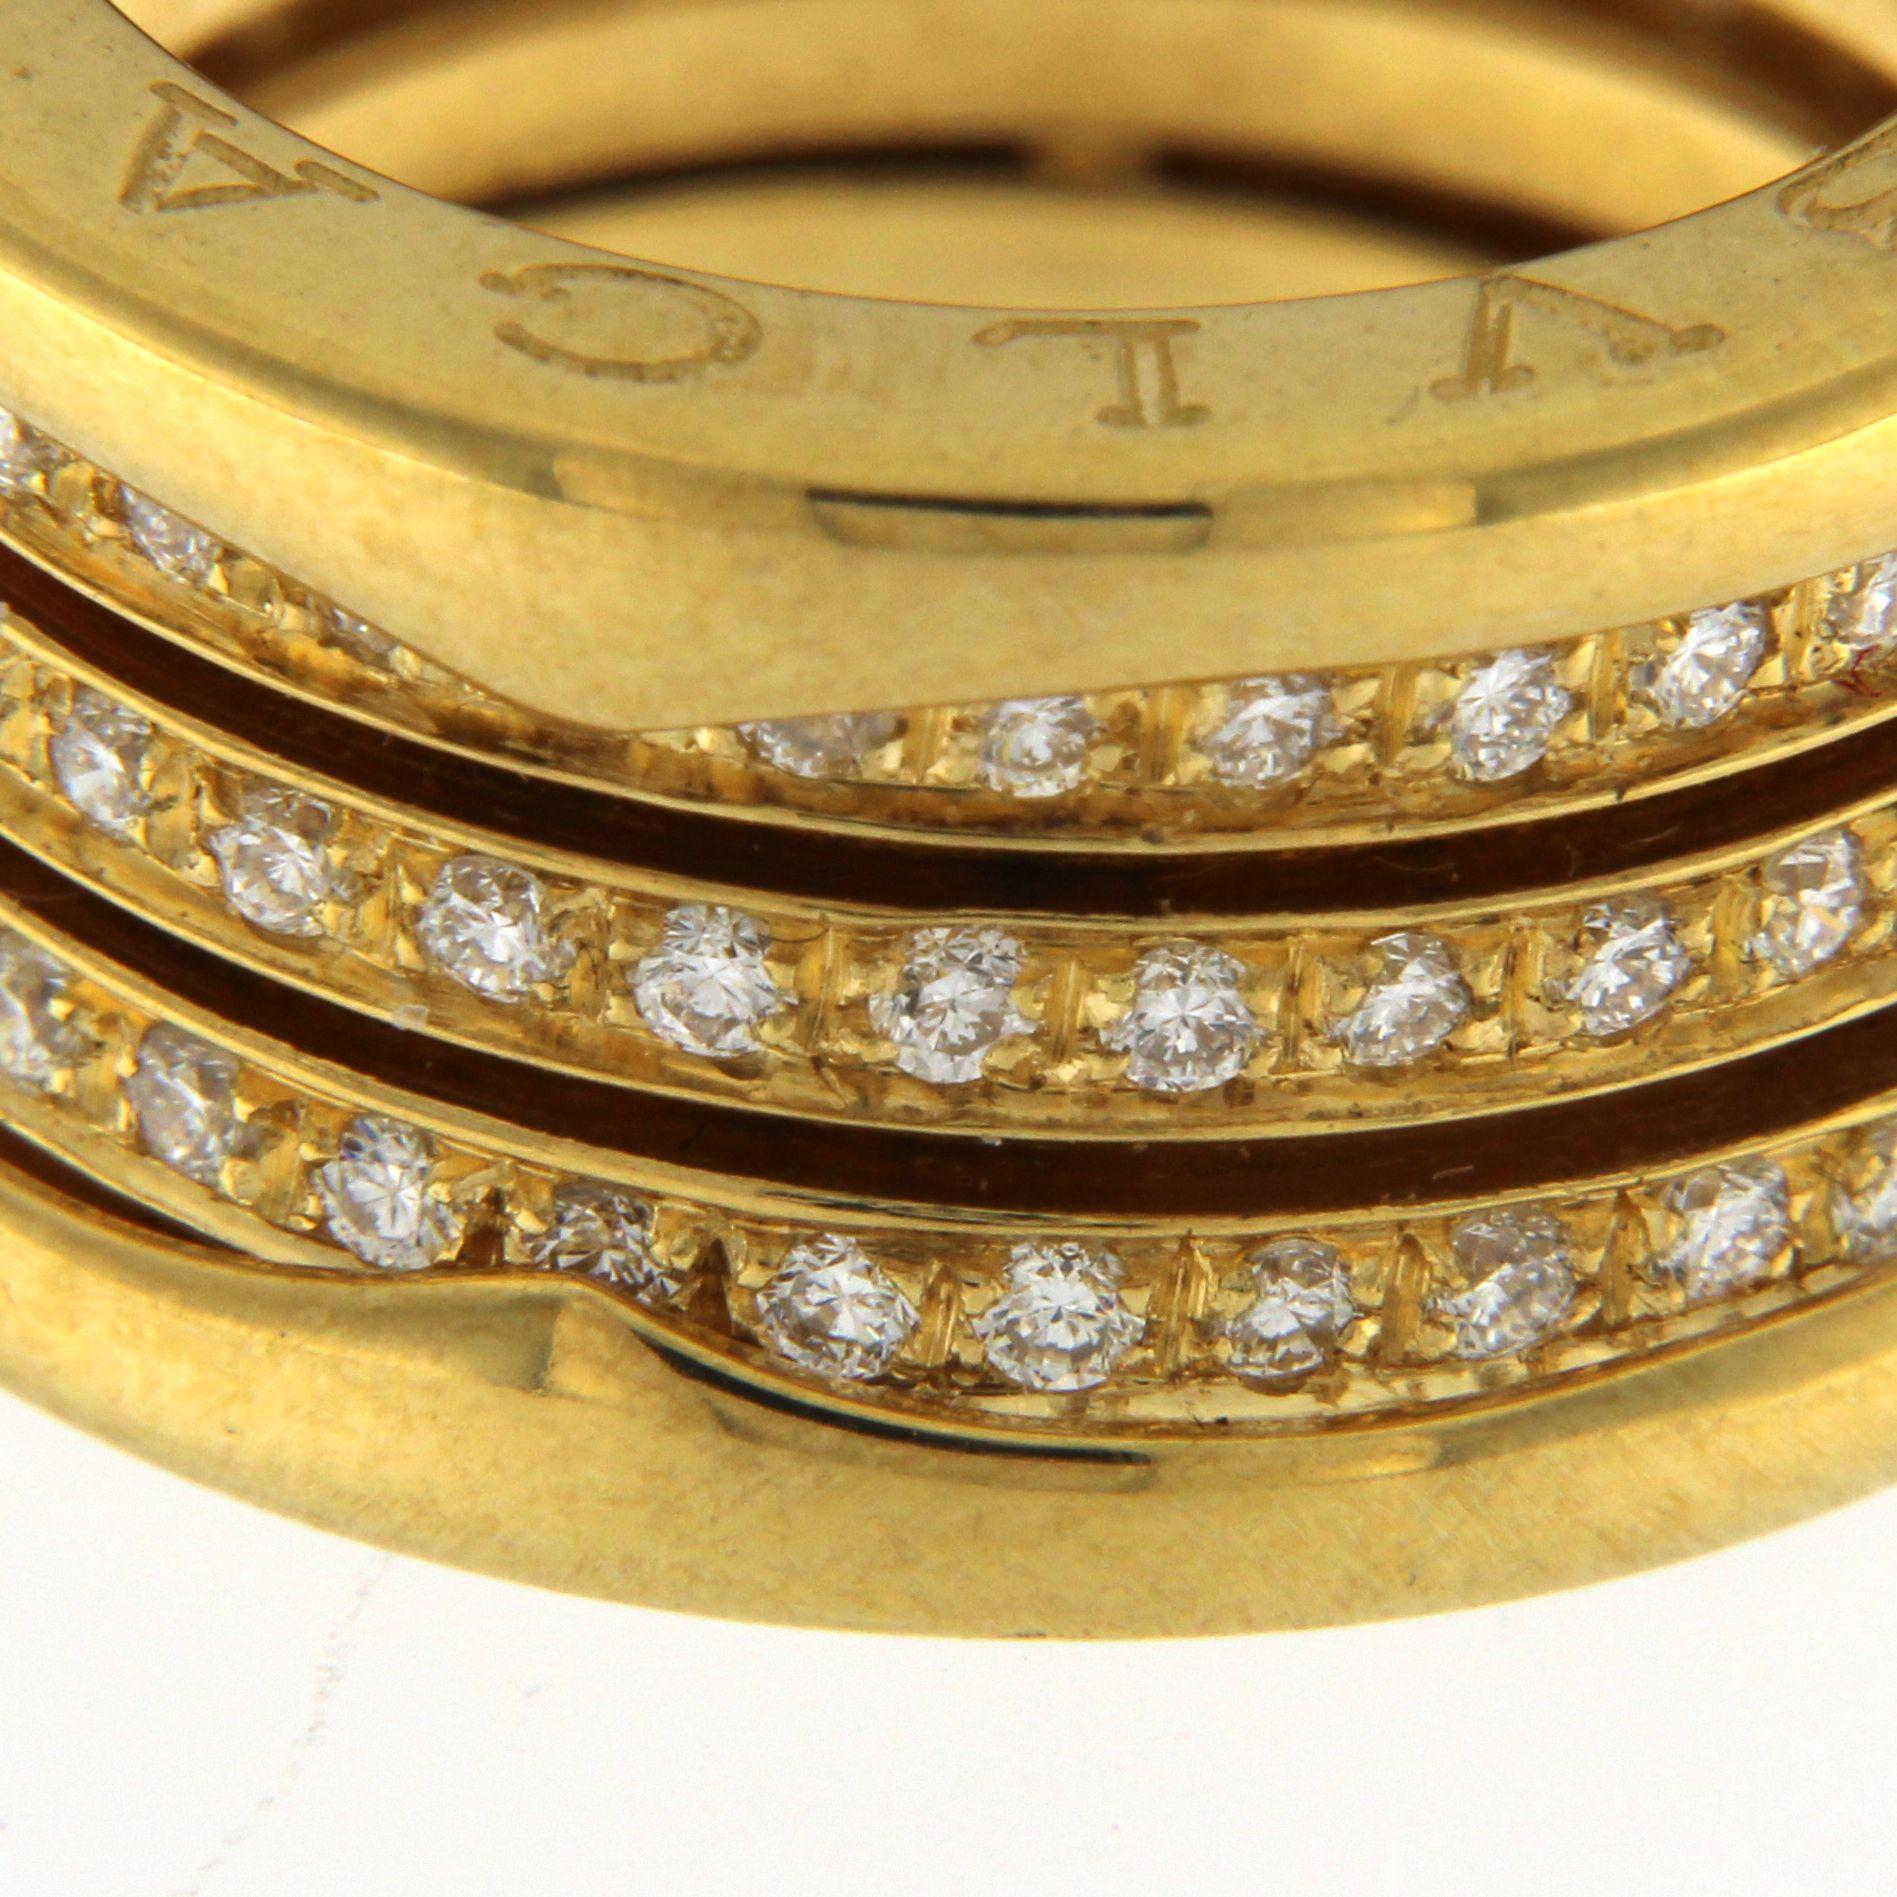 BZERO1 ring 18kt yellow gold       size 50        3 Band aprox ct 1.00